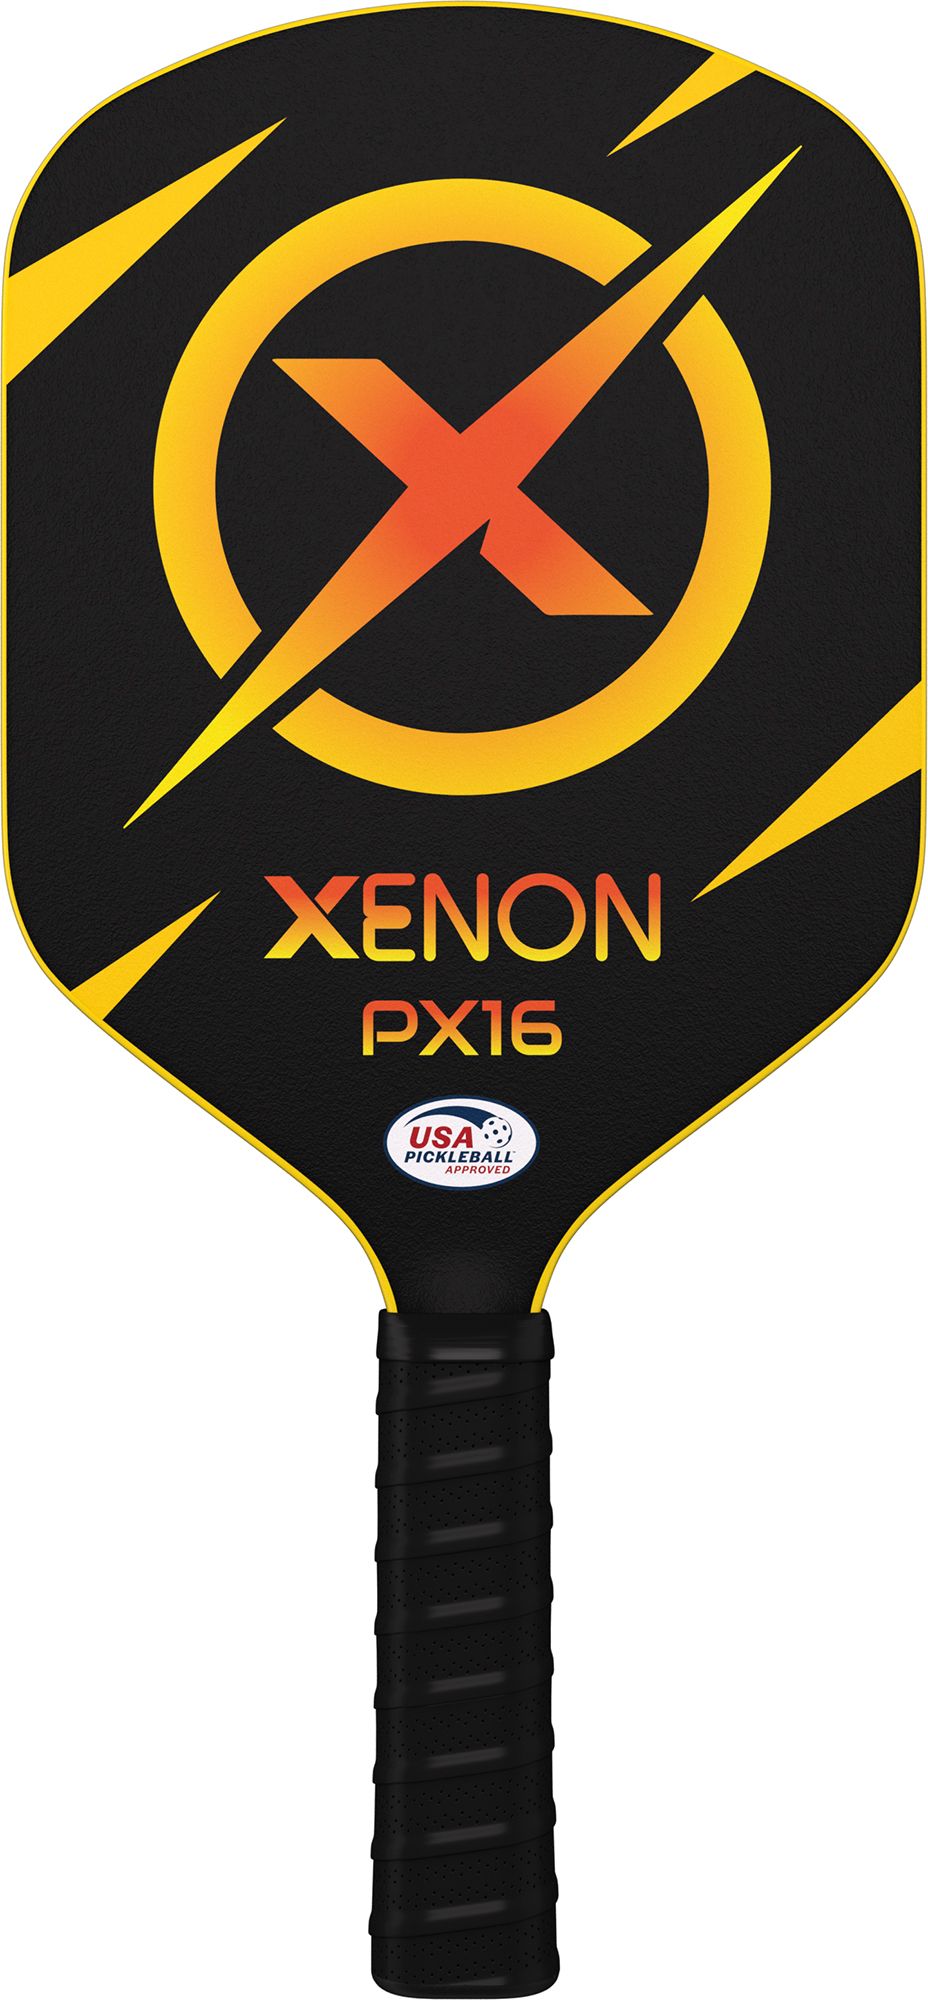 Xenon PX16 Pickleball Paddle